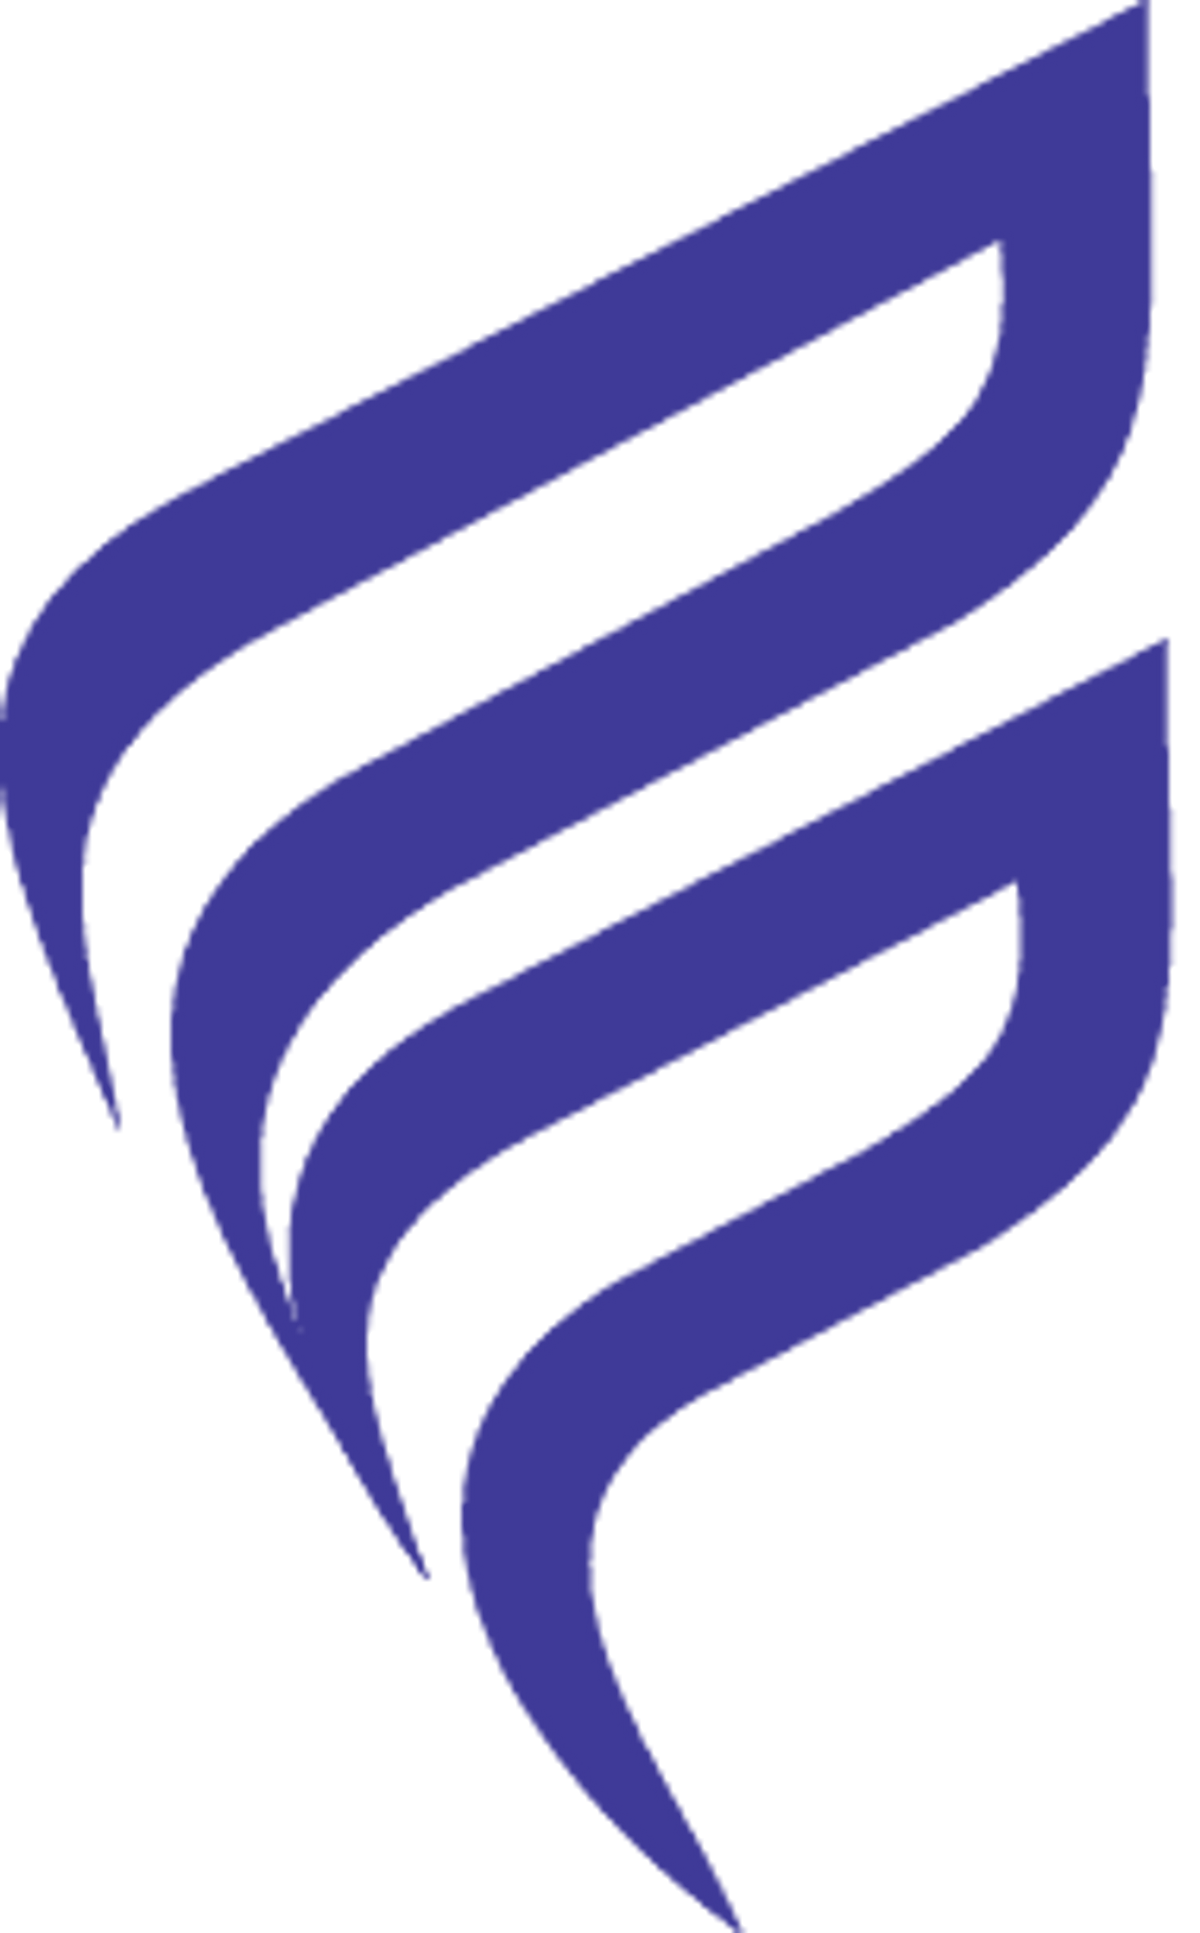 logomark-purple.png